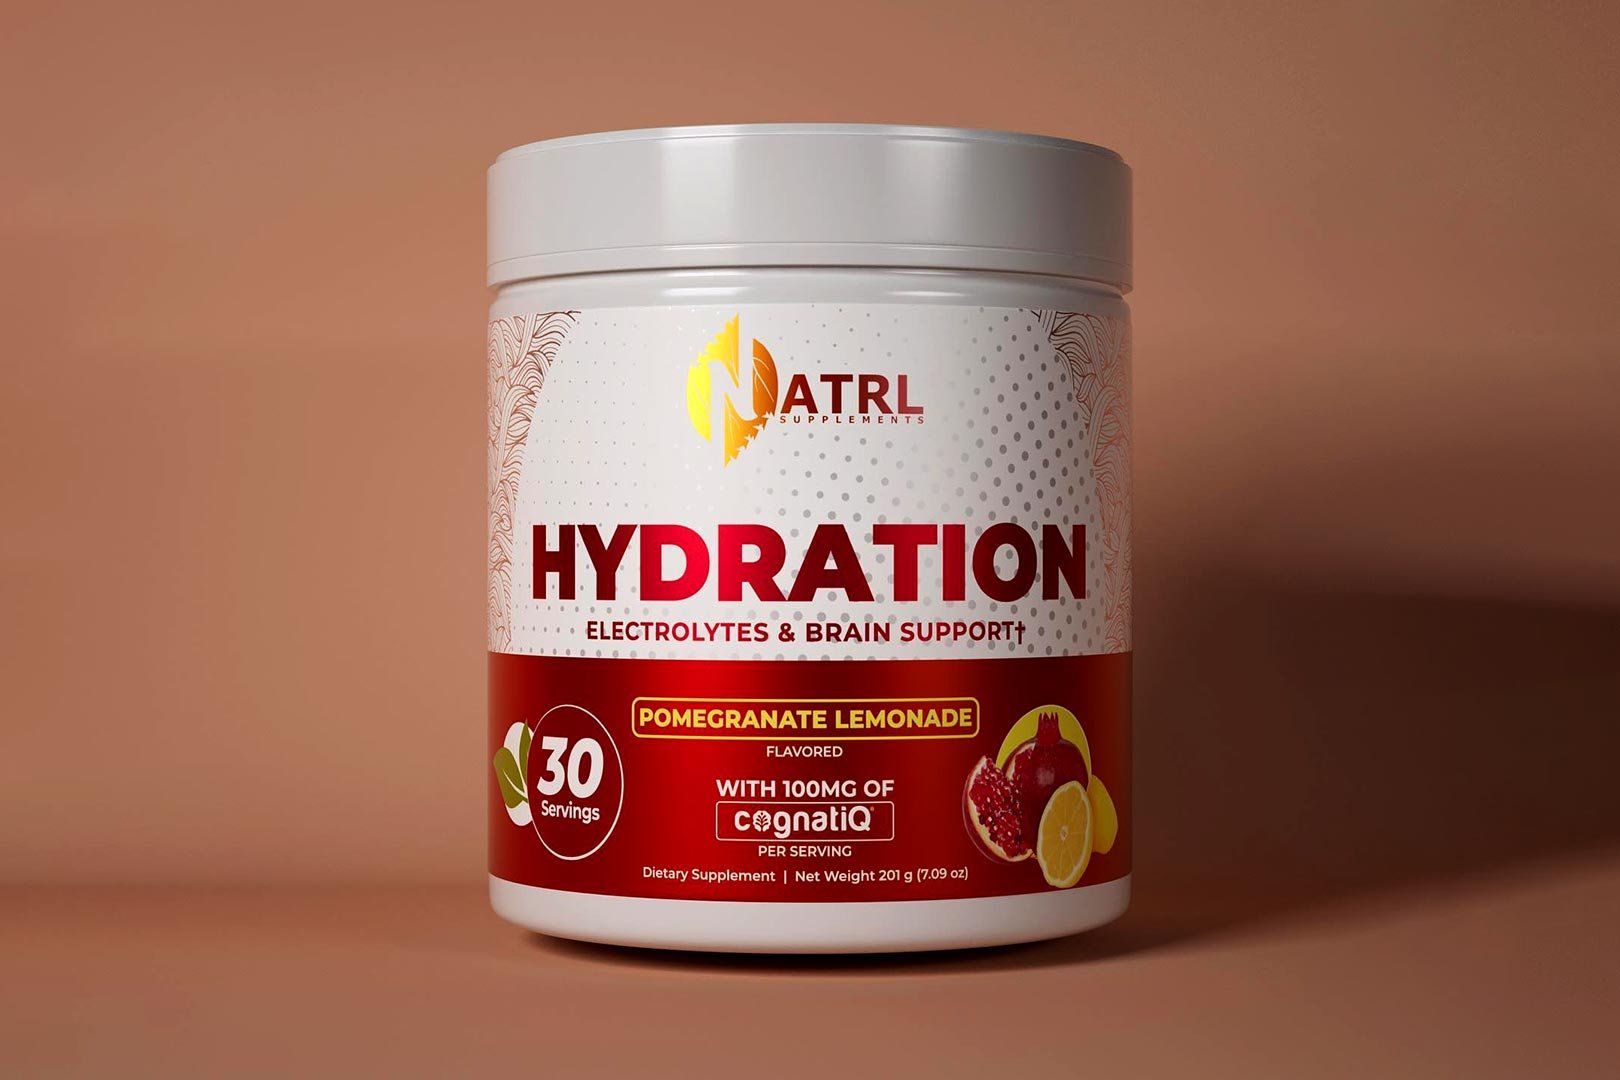 Natrl Hydration